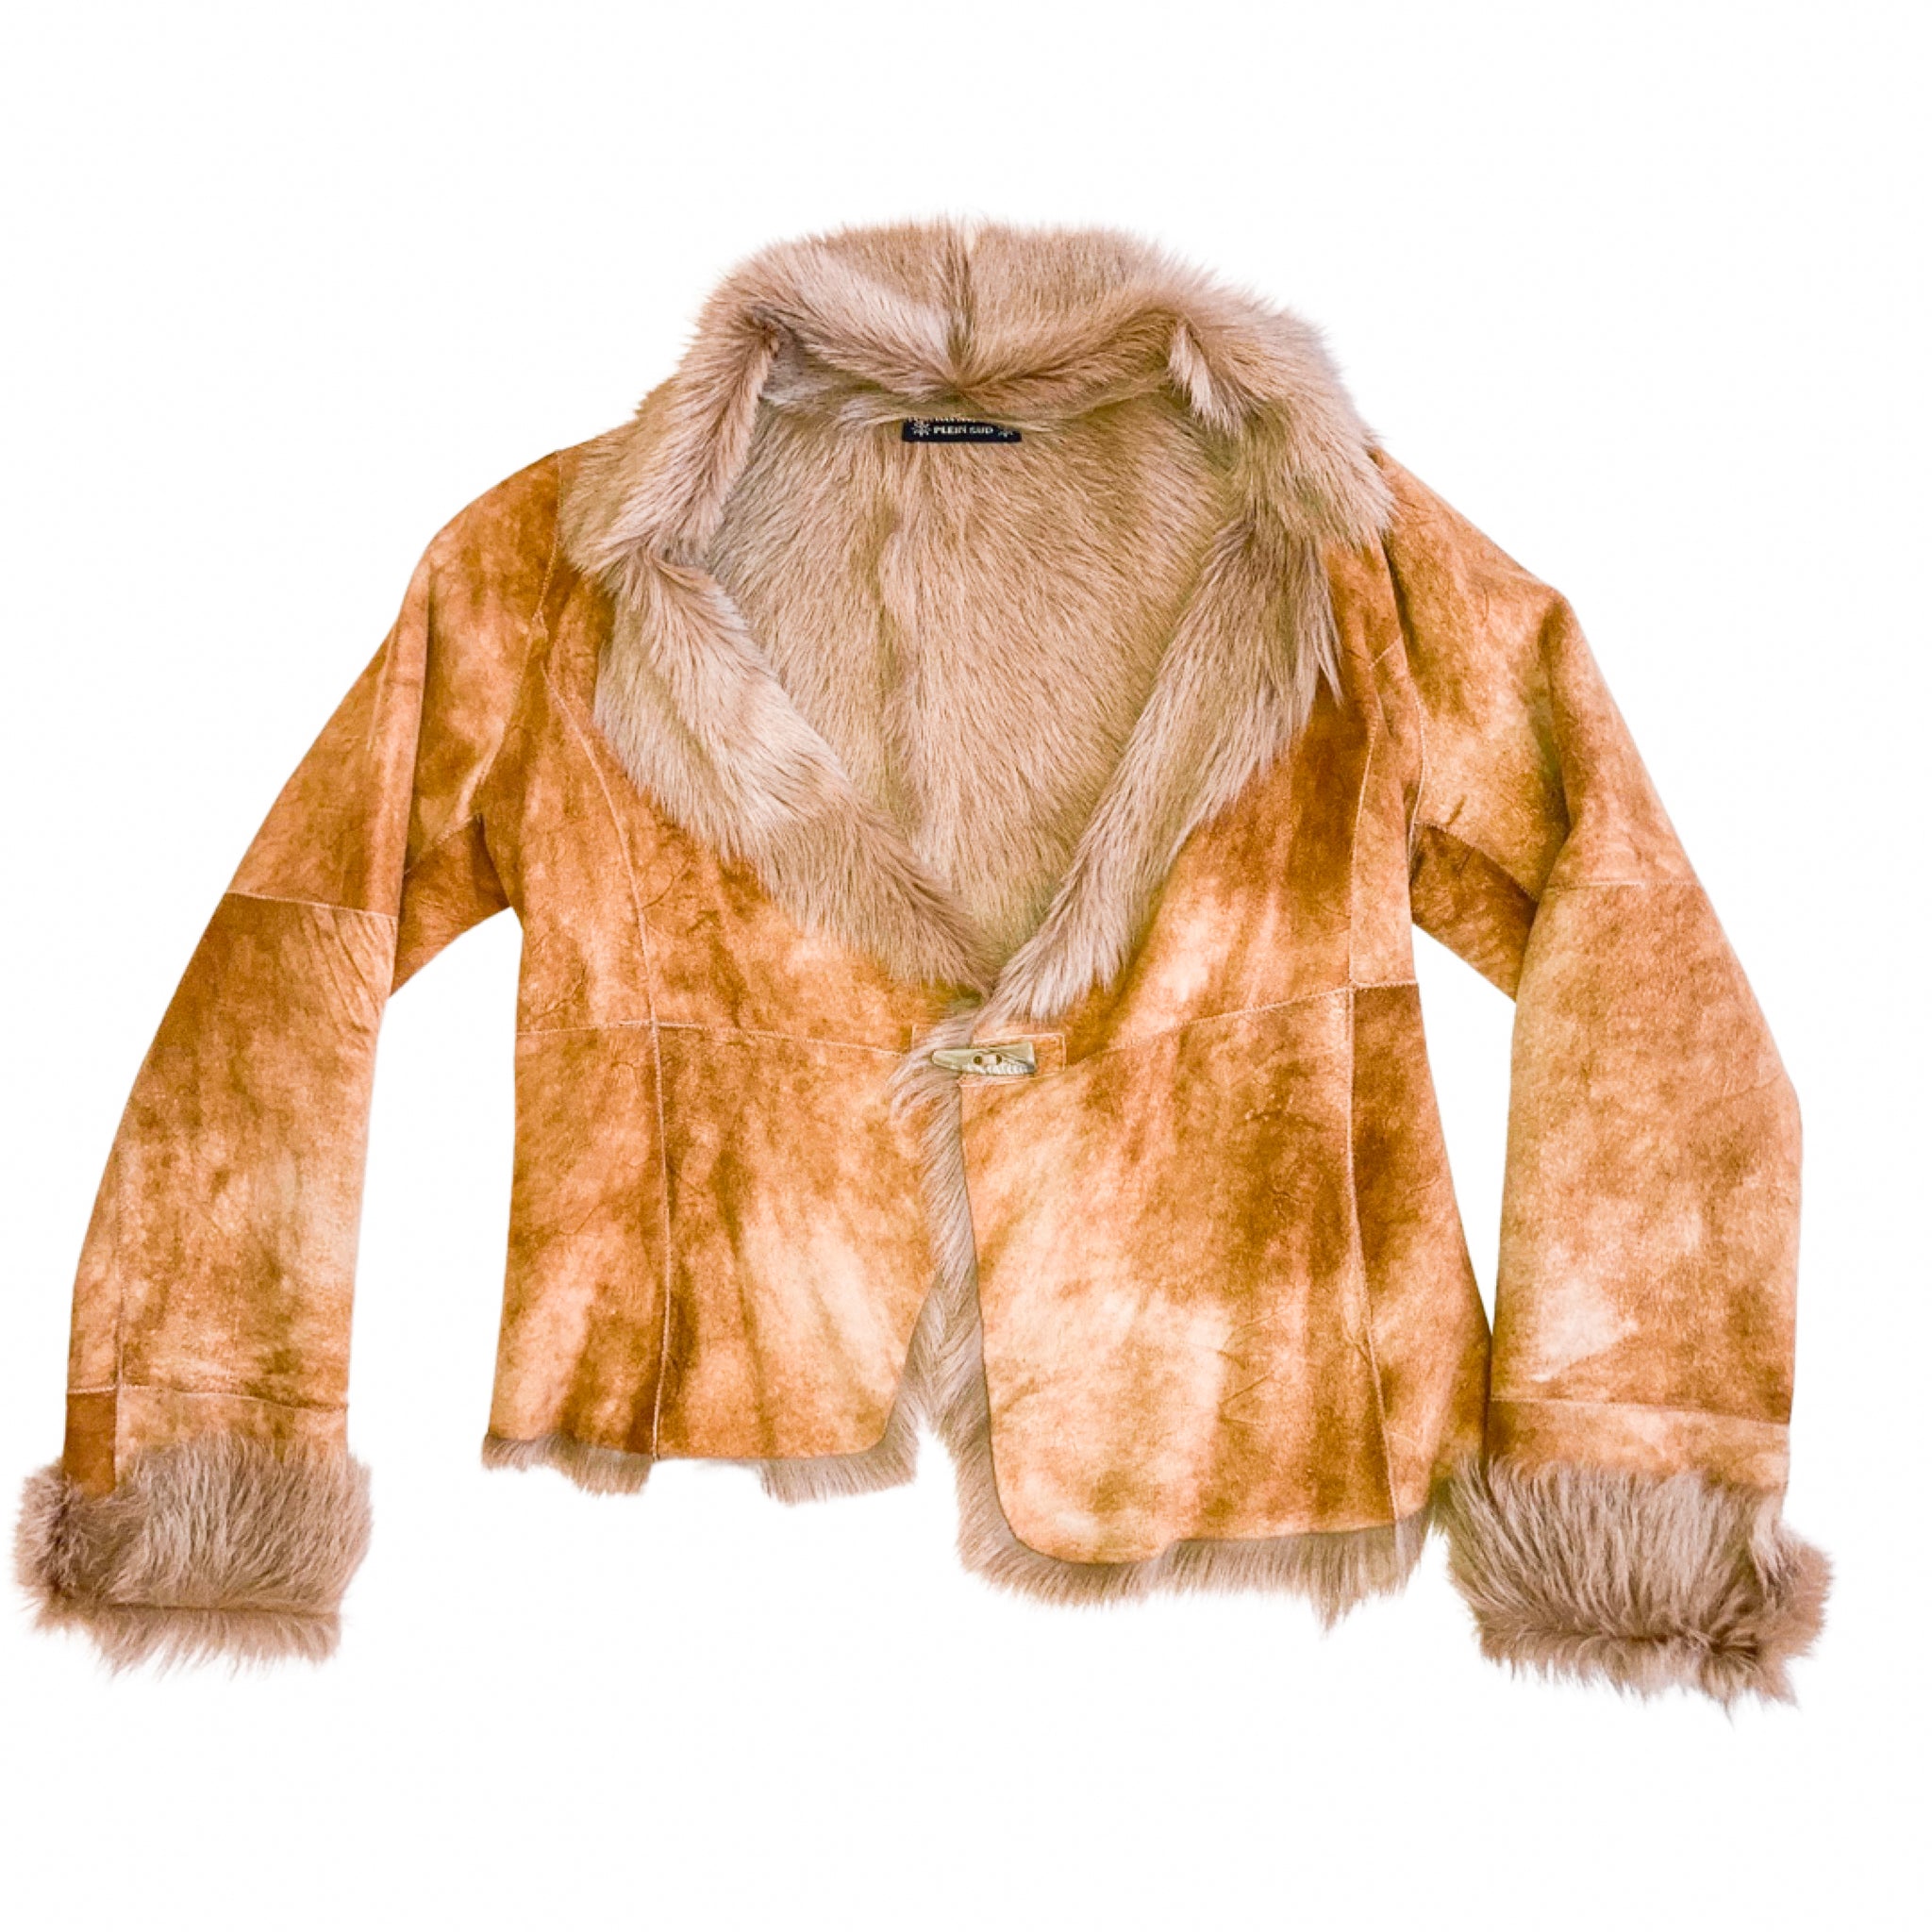 Plein Sud F/W 2002 Suede & Fur coat